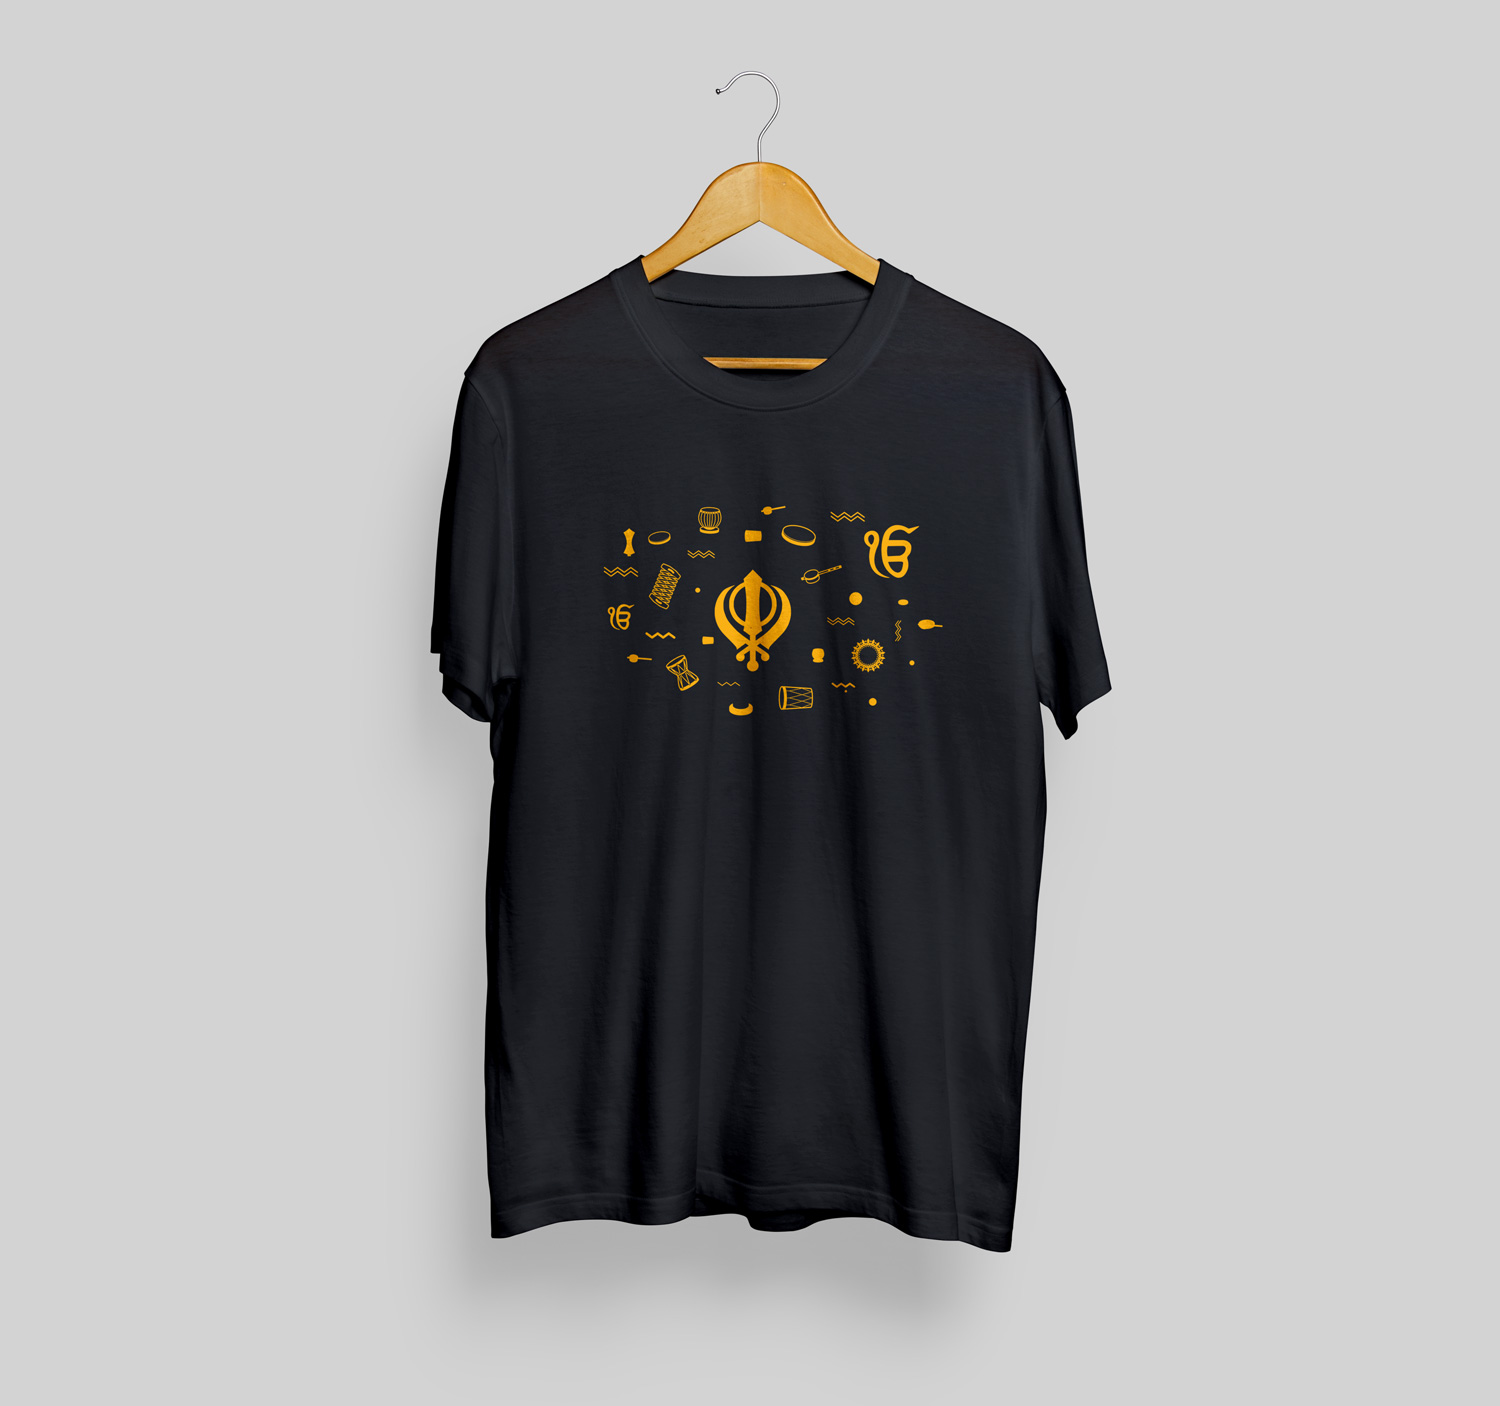 Sikh T-shirt Design